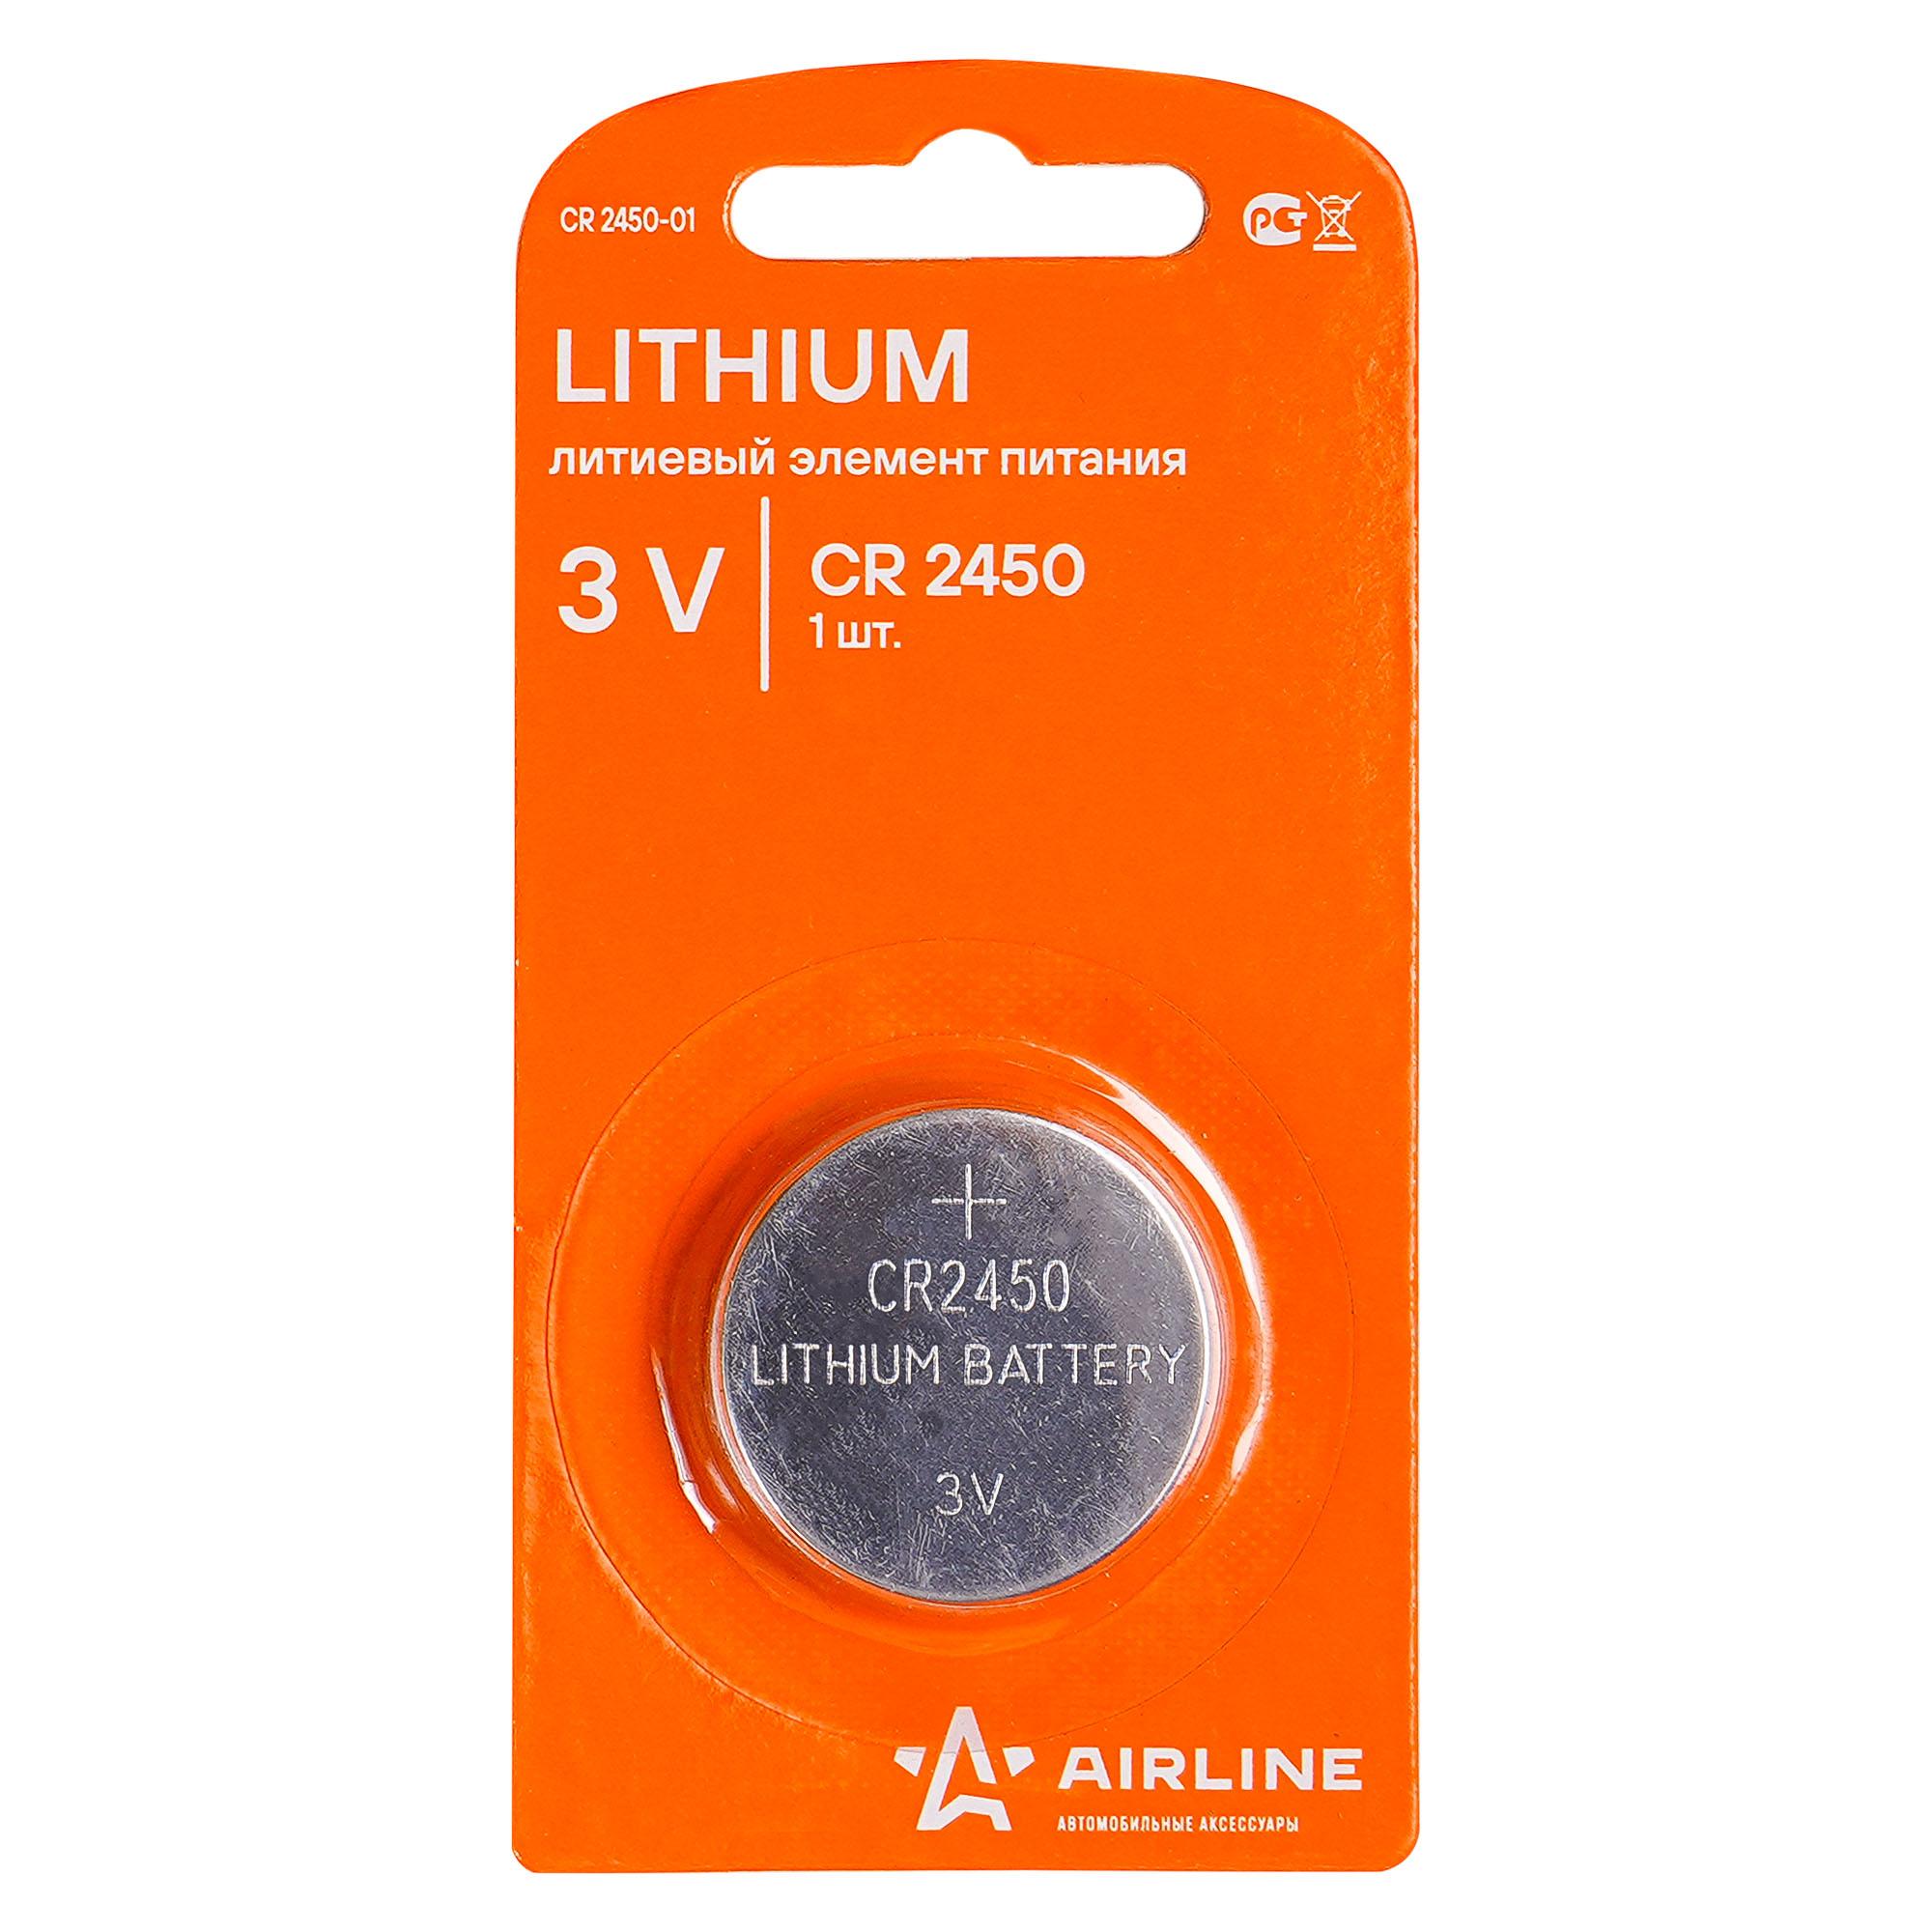 AIRLINE CR245001 Батарейка CR2450 3V для брелоков сигнализаций литиевая 1 шт. (CR2450-01) airline cr162001 батарейка cr1620 3v для брелоков сигнализаций литиевая 1 шт